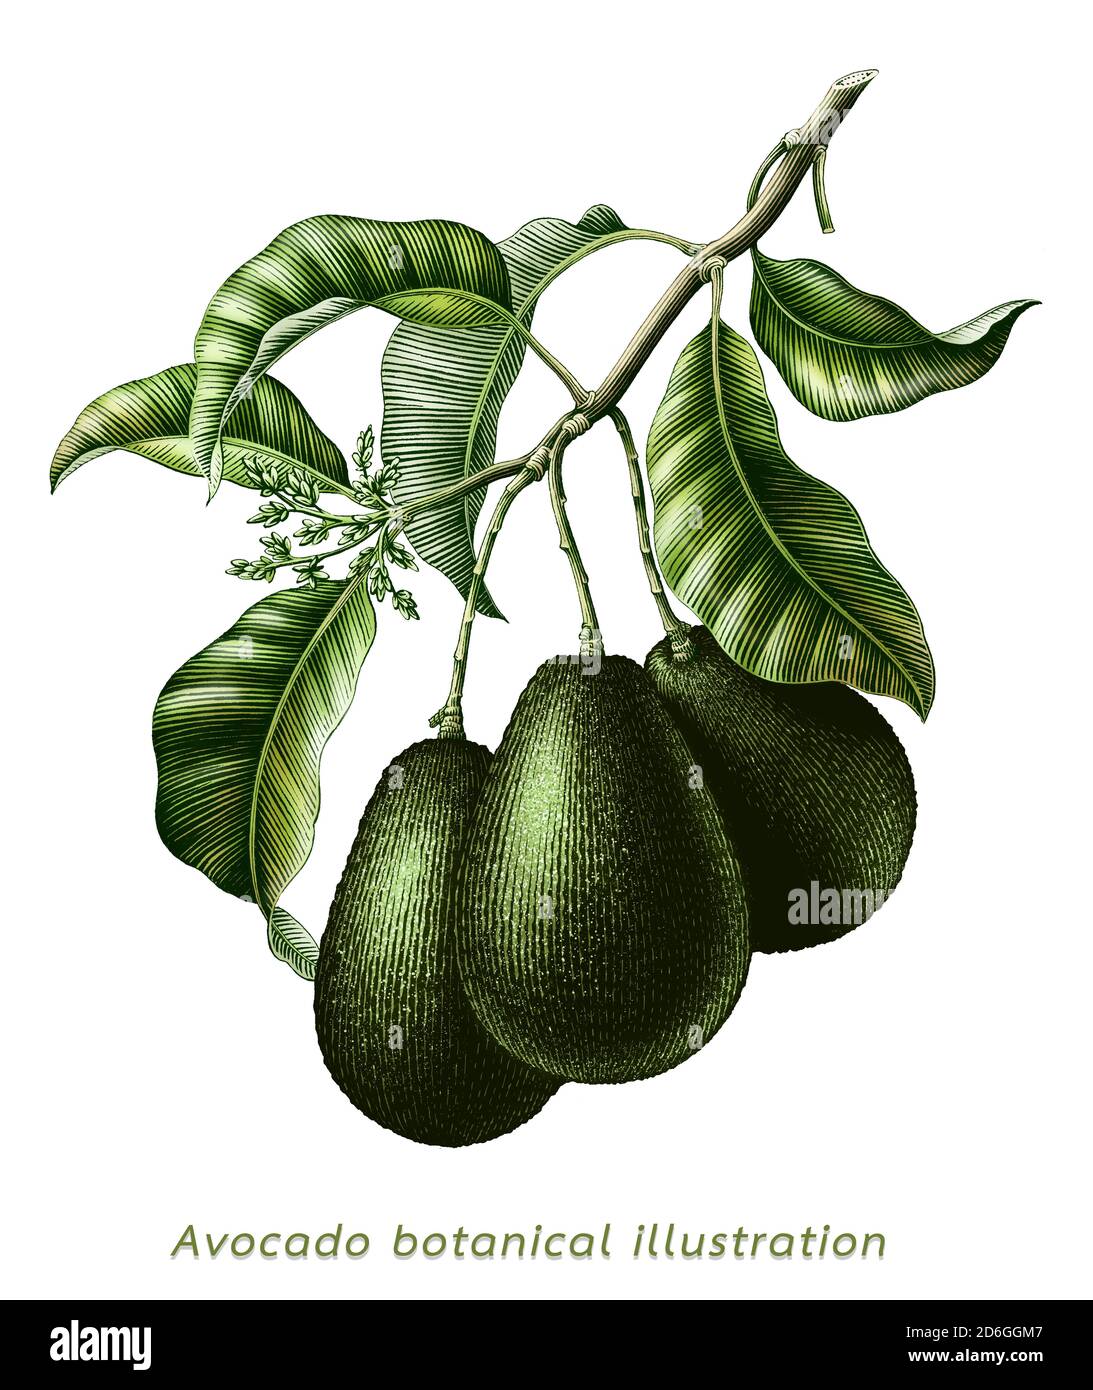 Avocado branch botanical illustration vintage engraving style clip art isolated on white background Stock Photo